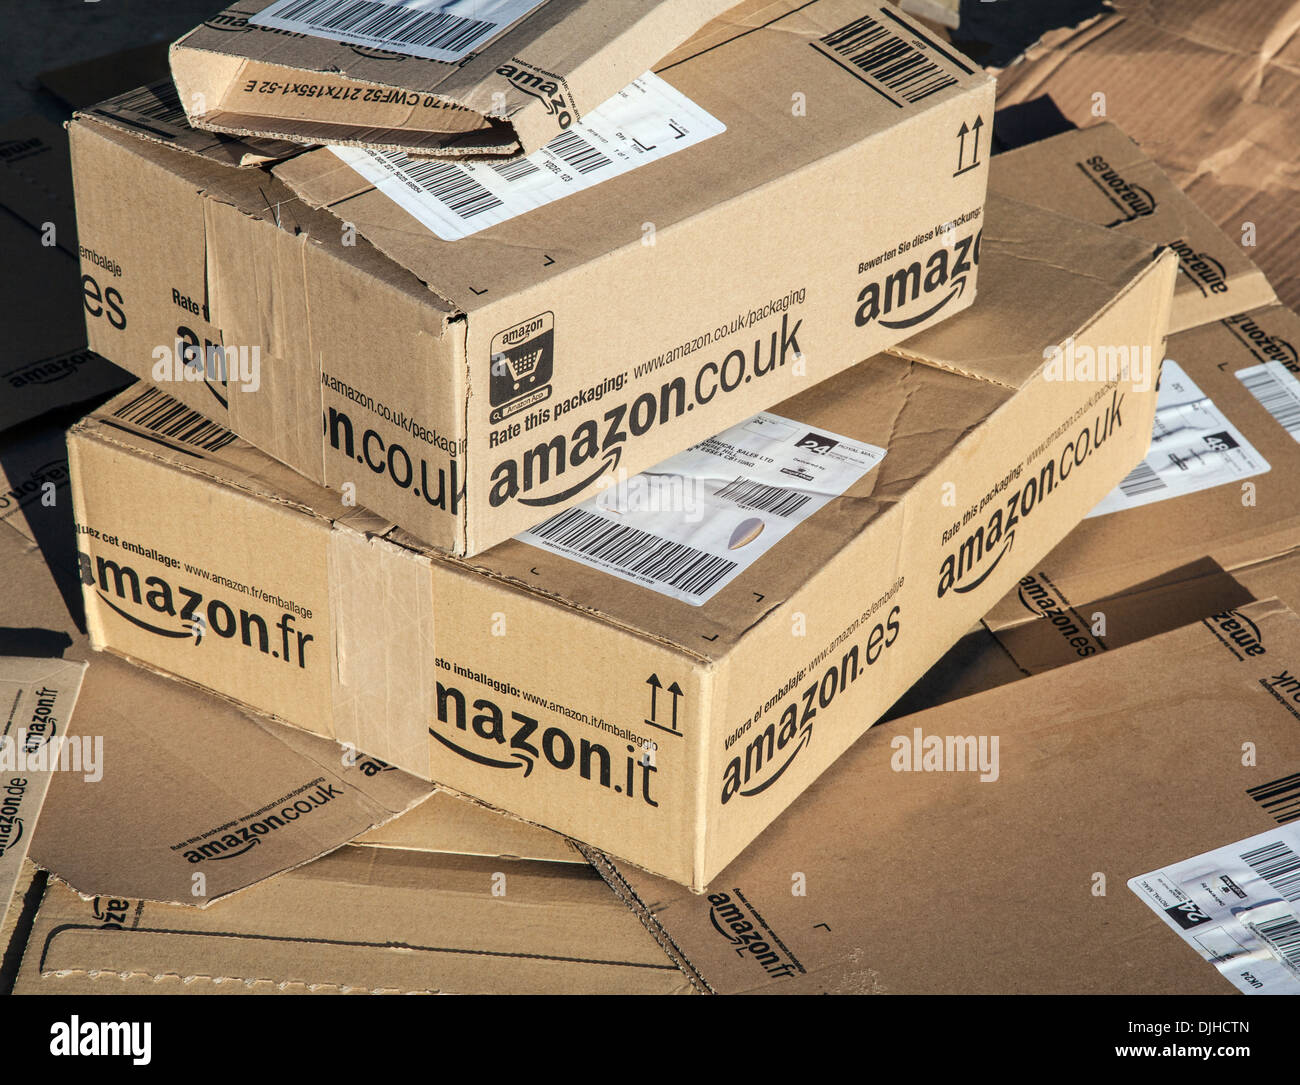 Amazon-Paket-post Stockfotografie - Alamy